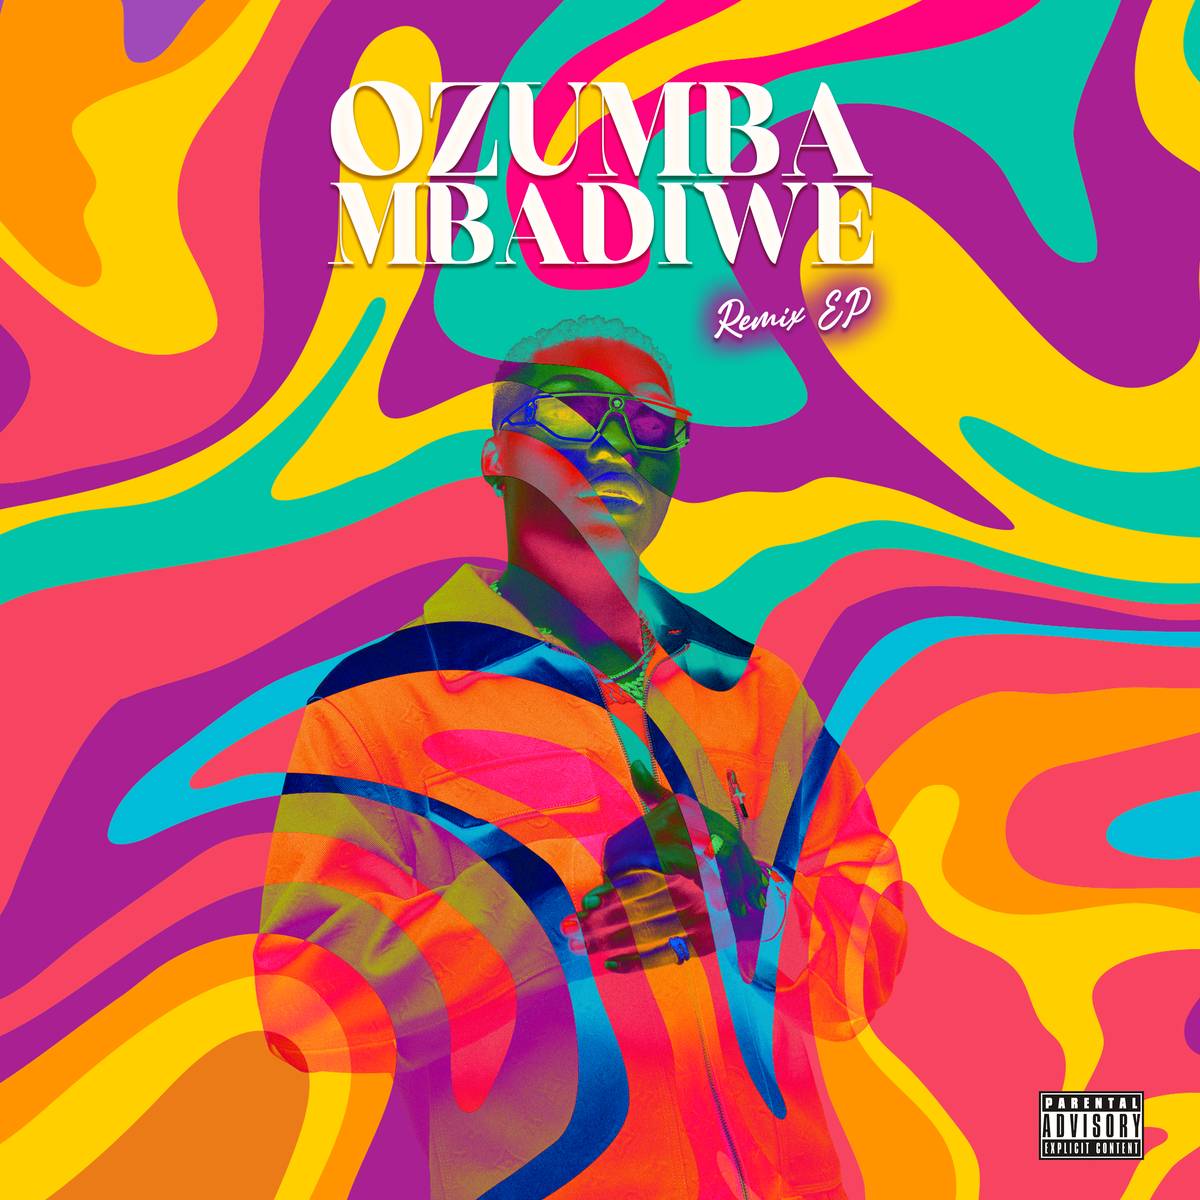 Reekado Banks - Ozumba Mbadiwe (Remix EP)